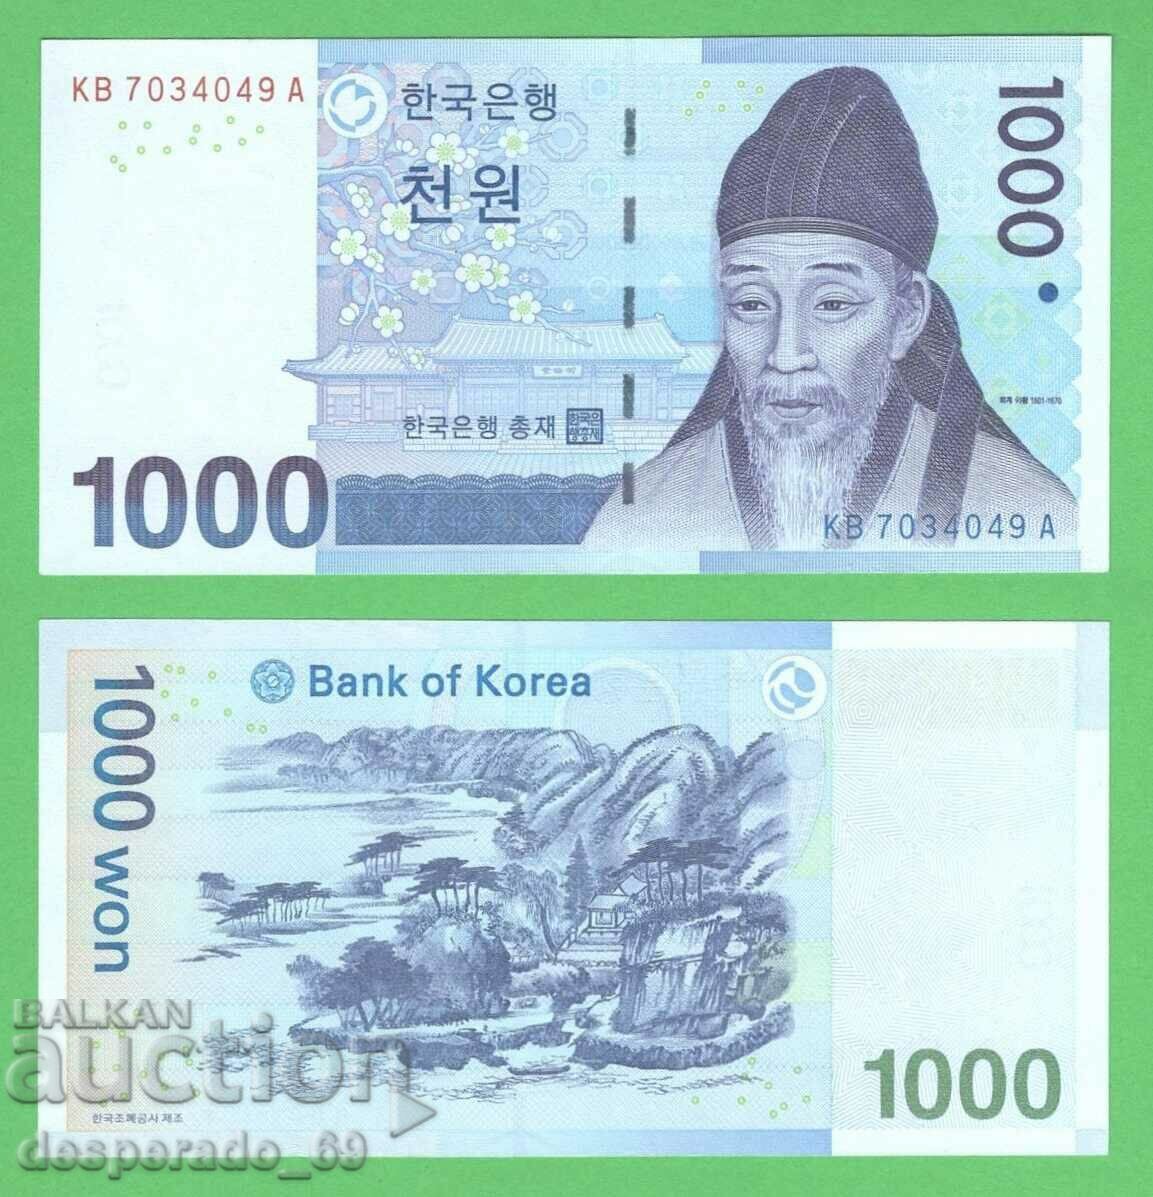 (¯`'•.¸ KOREA 1000 Won 2007 UNC ¸.•'´¯)